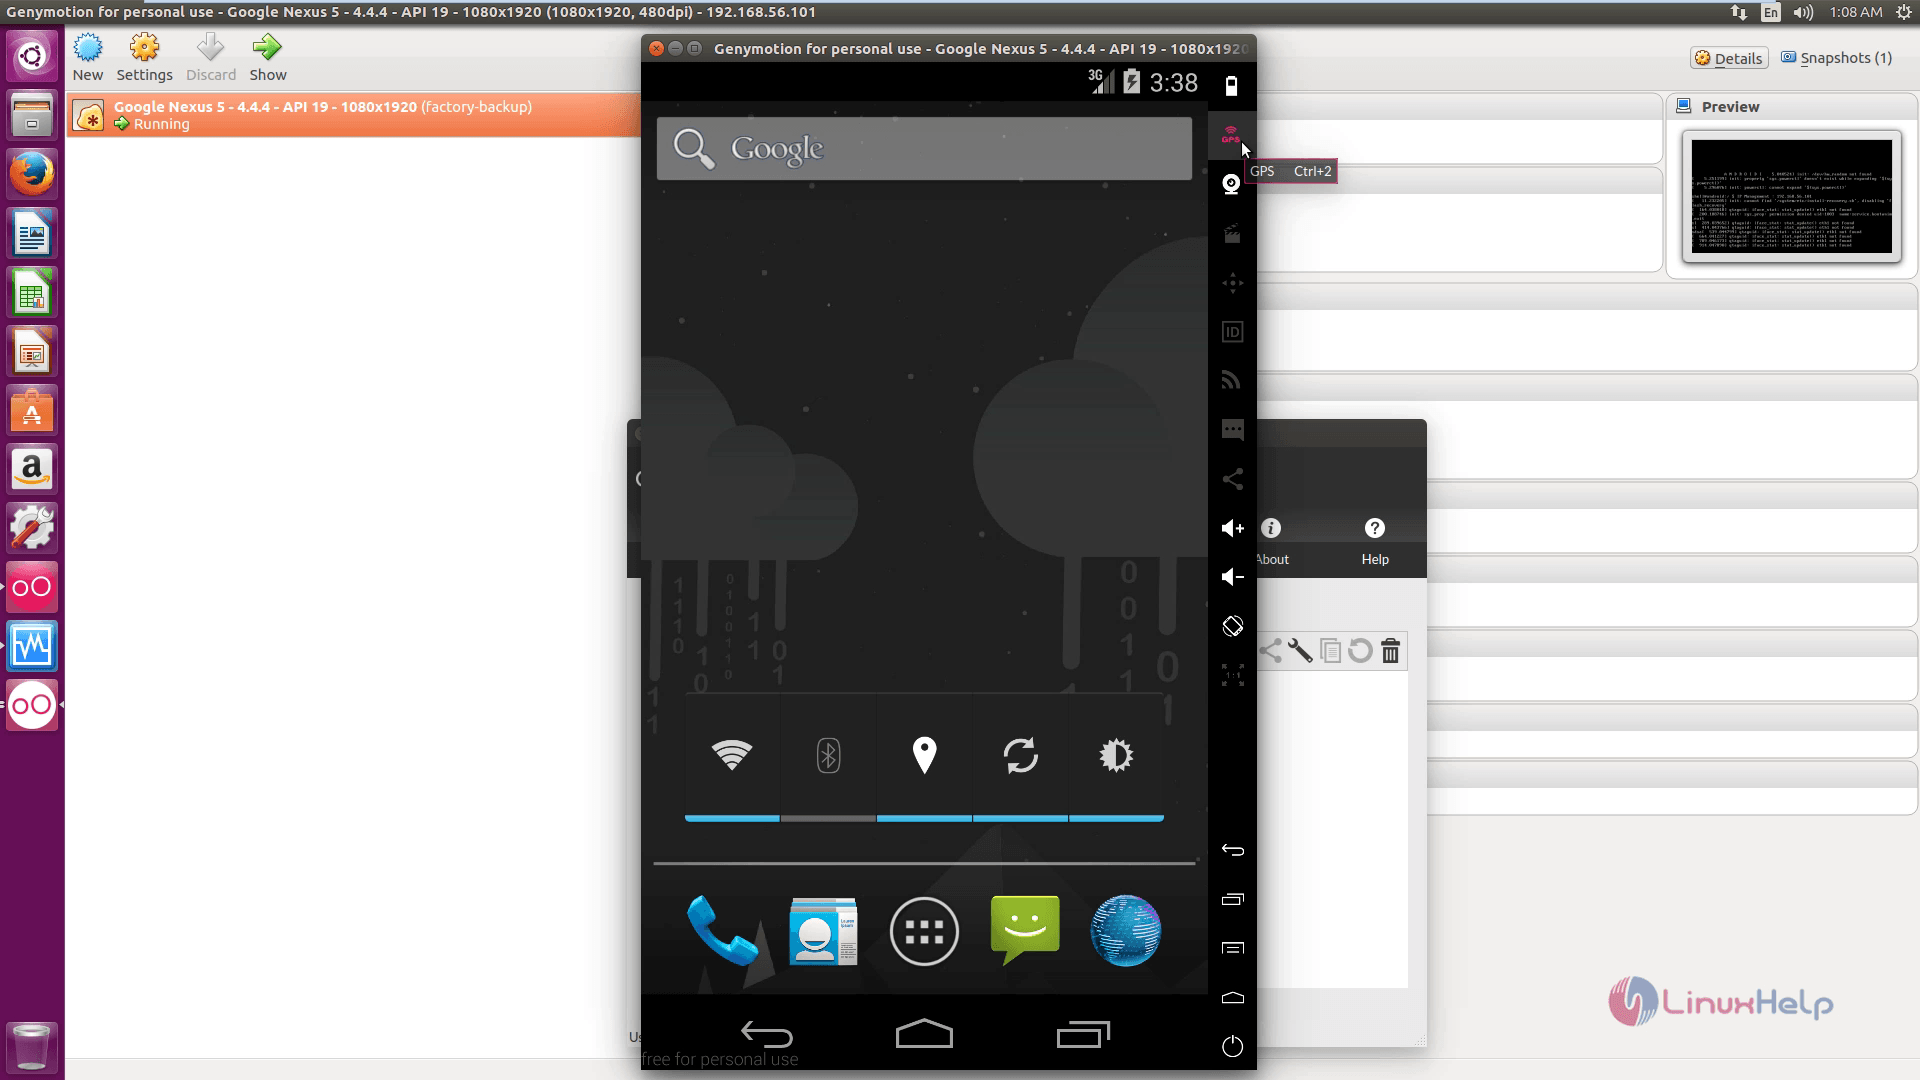 run-Android-Apps-Ubuntu-Genymotion-Emulator-testing-and-presentation-GPS-icon